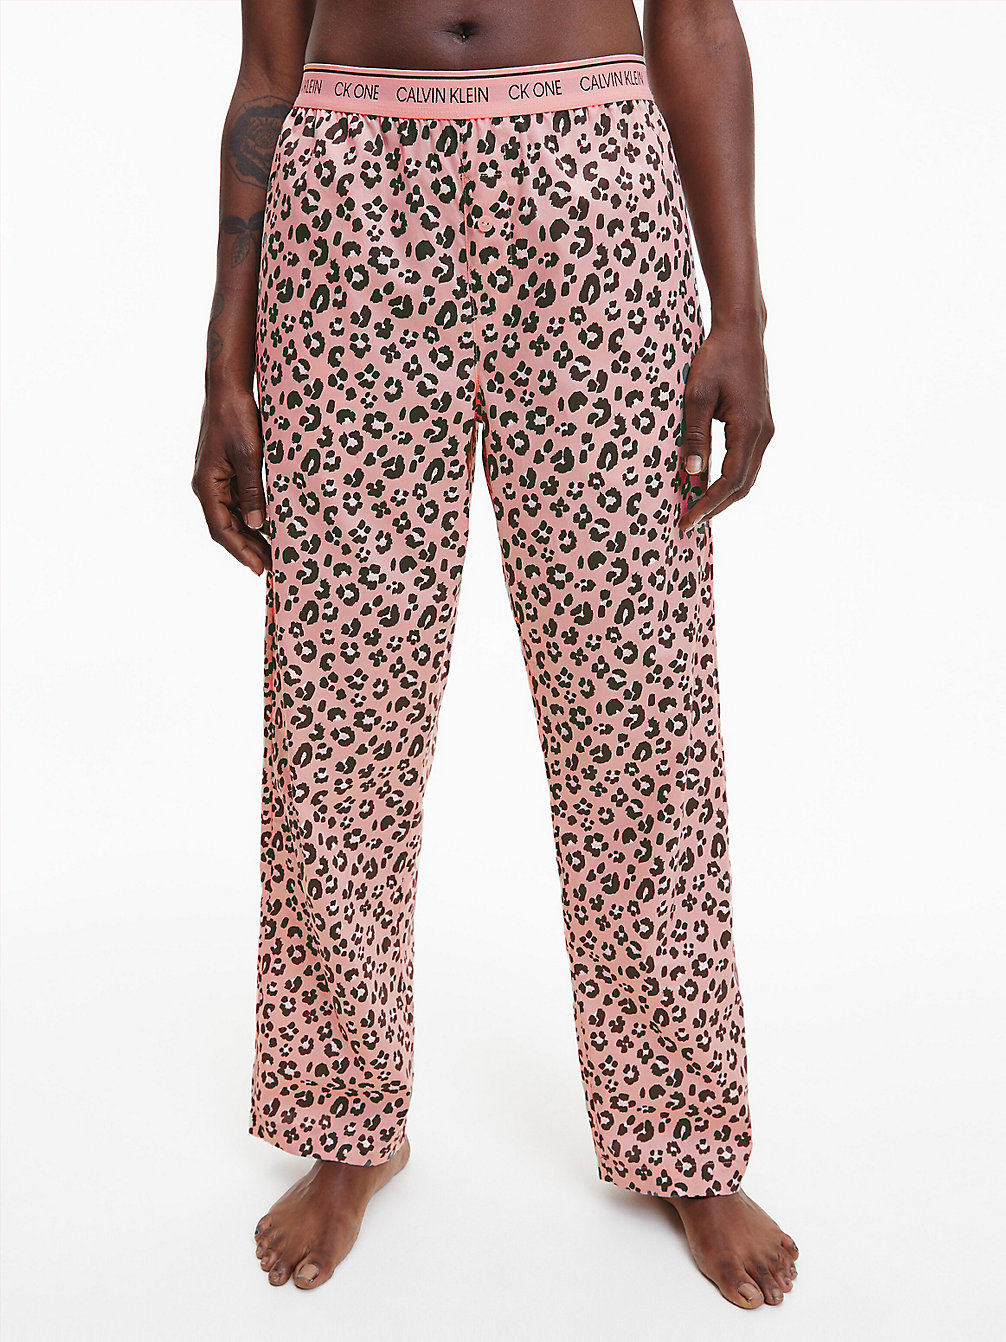 STEPHEN LEOPARD PRINT_PEACH MELBA > Пижамные штаны - CK One > undefined Женщины - Calvin Klein